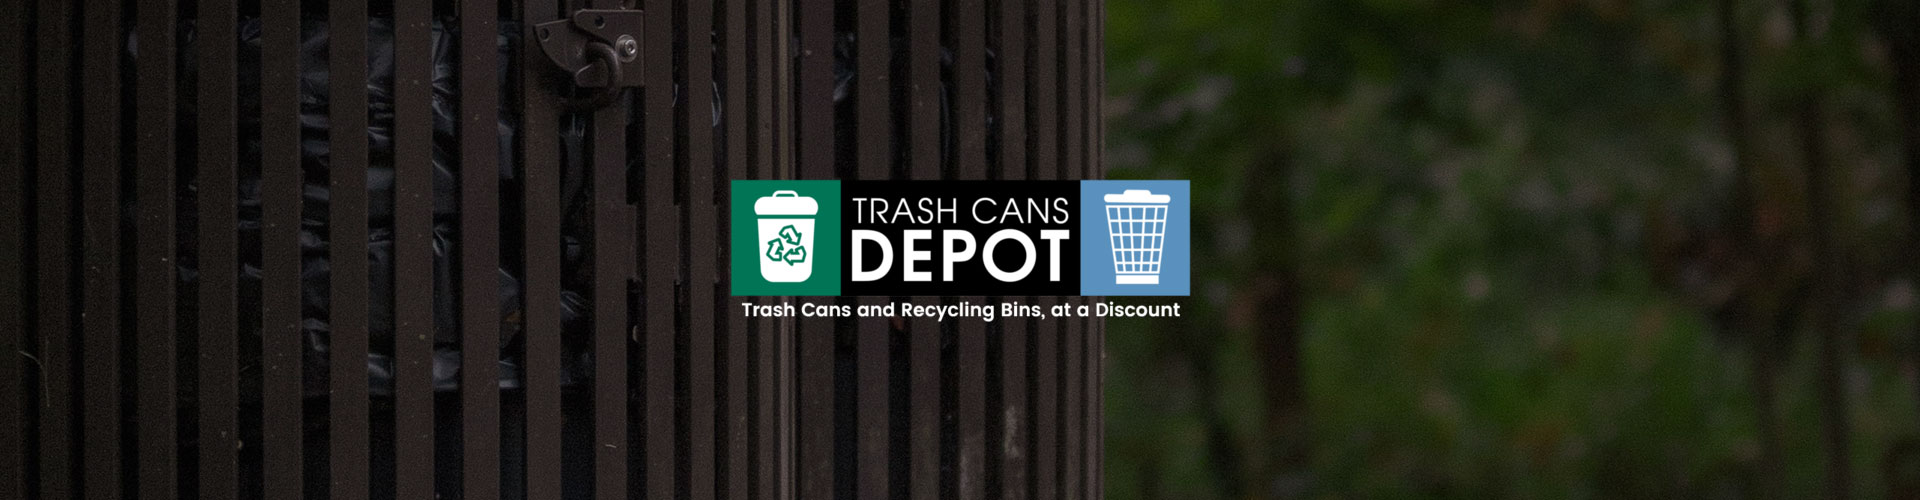 Case Study - Trash Cans Depot